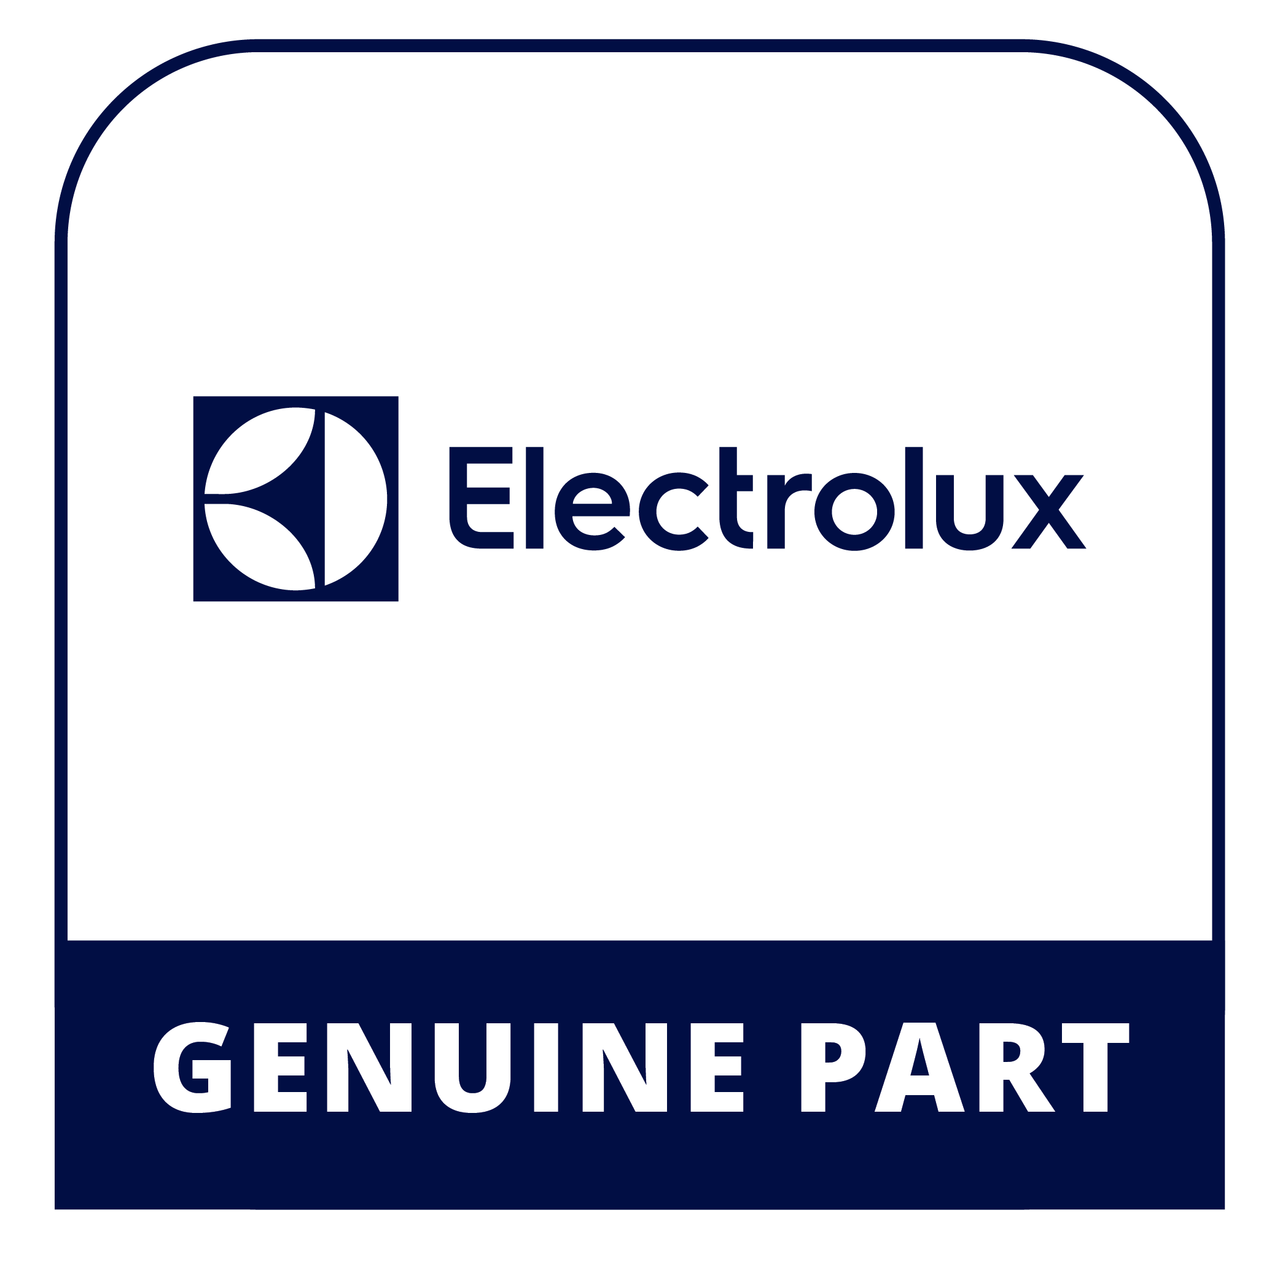 Frigidaire - Electrolux 5304496831 Cover - Genuine Electrolux Part